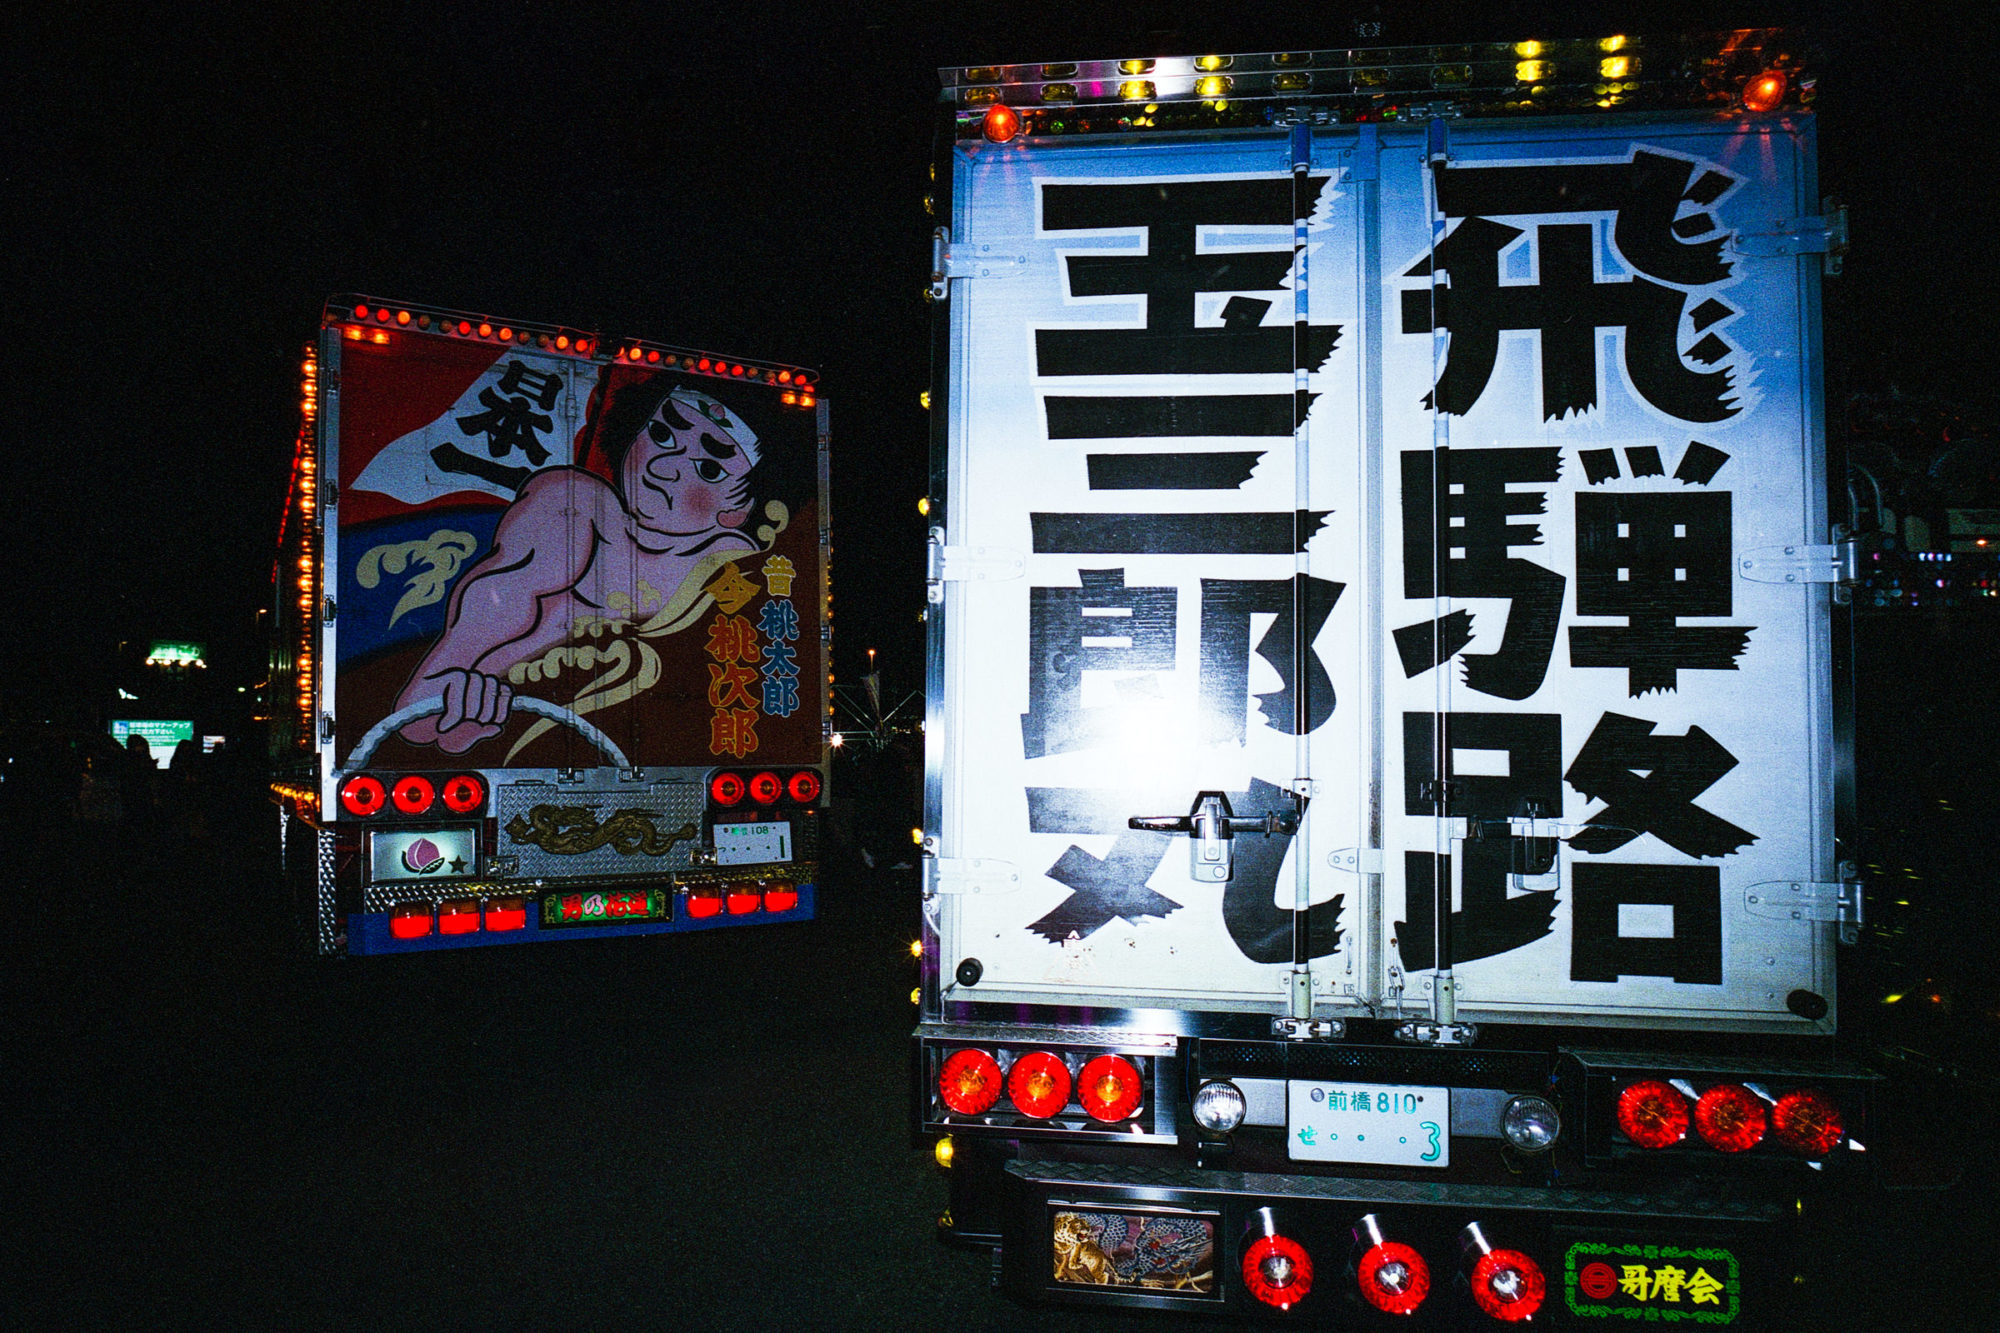 Decotora: The Japanese Art of Decorating Trucks